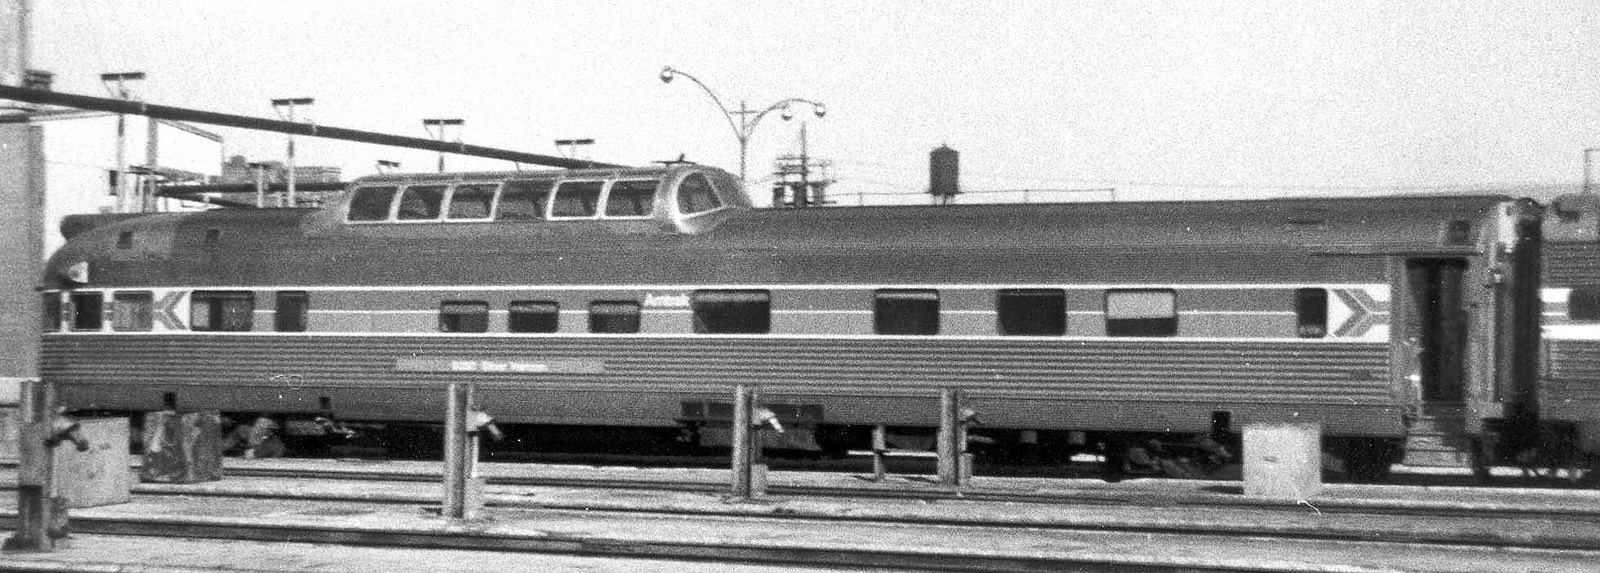 Amtrak Silver Horizon, Chicago, IL